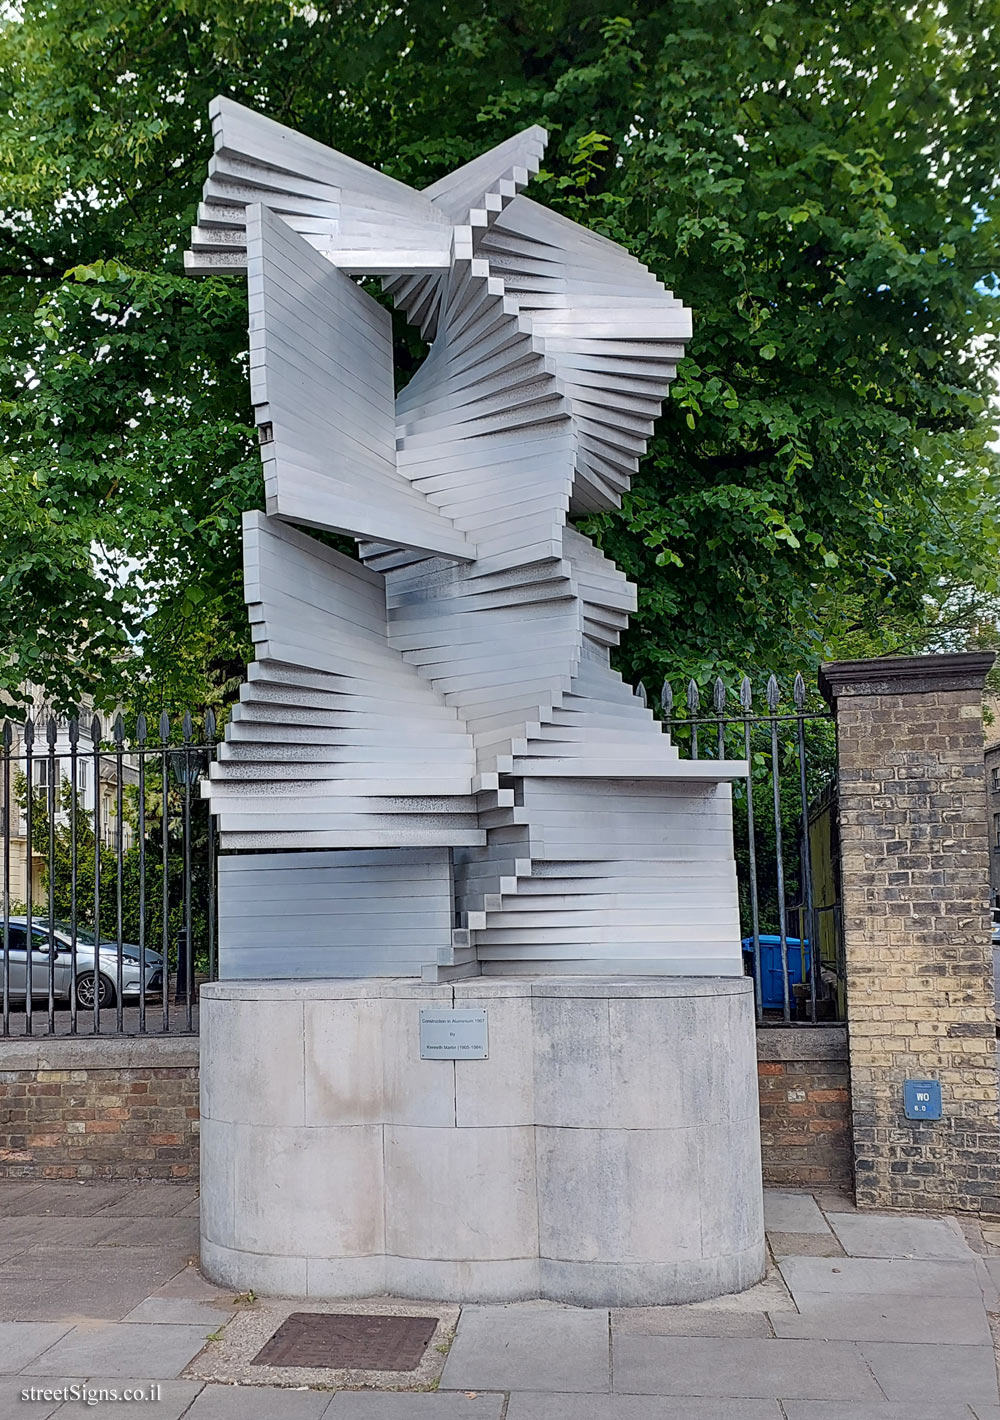 Cambridge - "Construction In Aluminium" An outdoor sculpture by Kenneth Martin - 7 Trumpington St, Cambridge CB2 1PX, UK